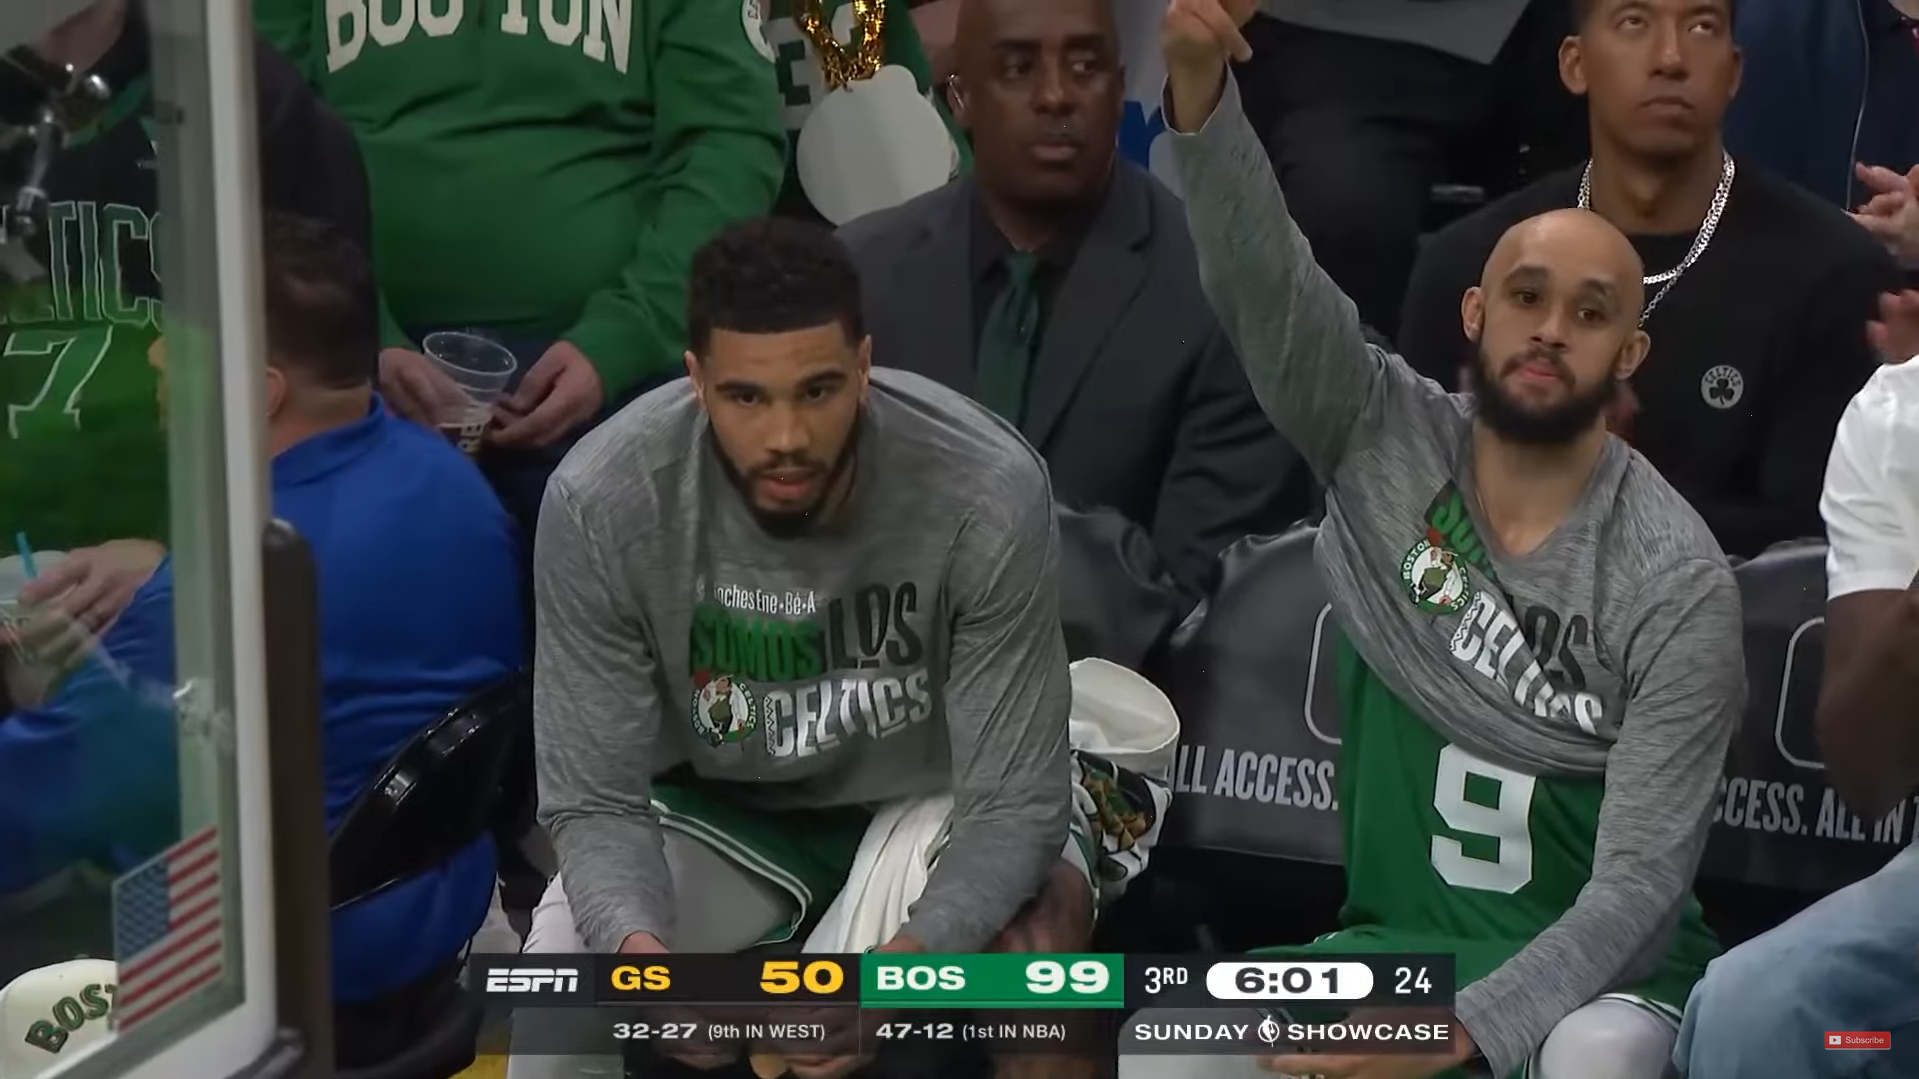 Celtics fuck gsw